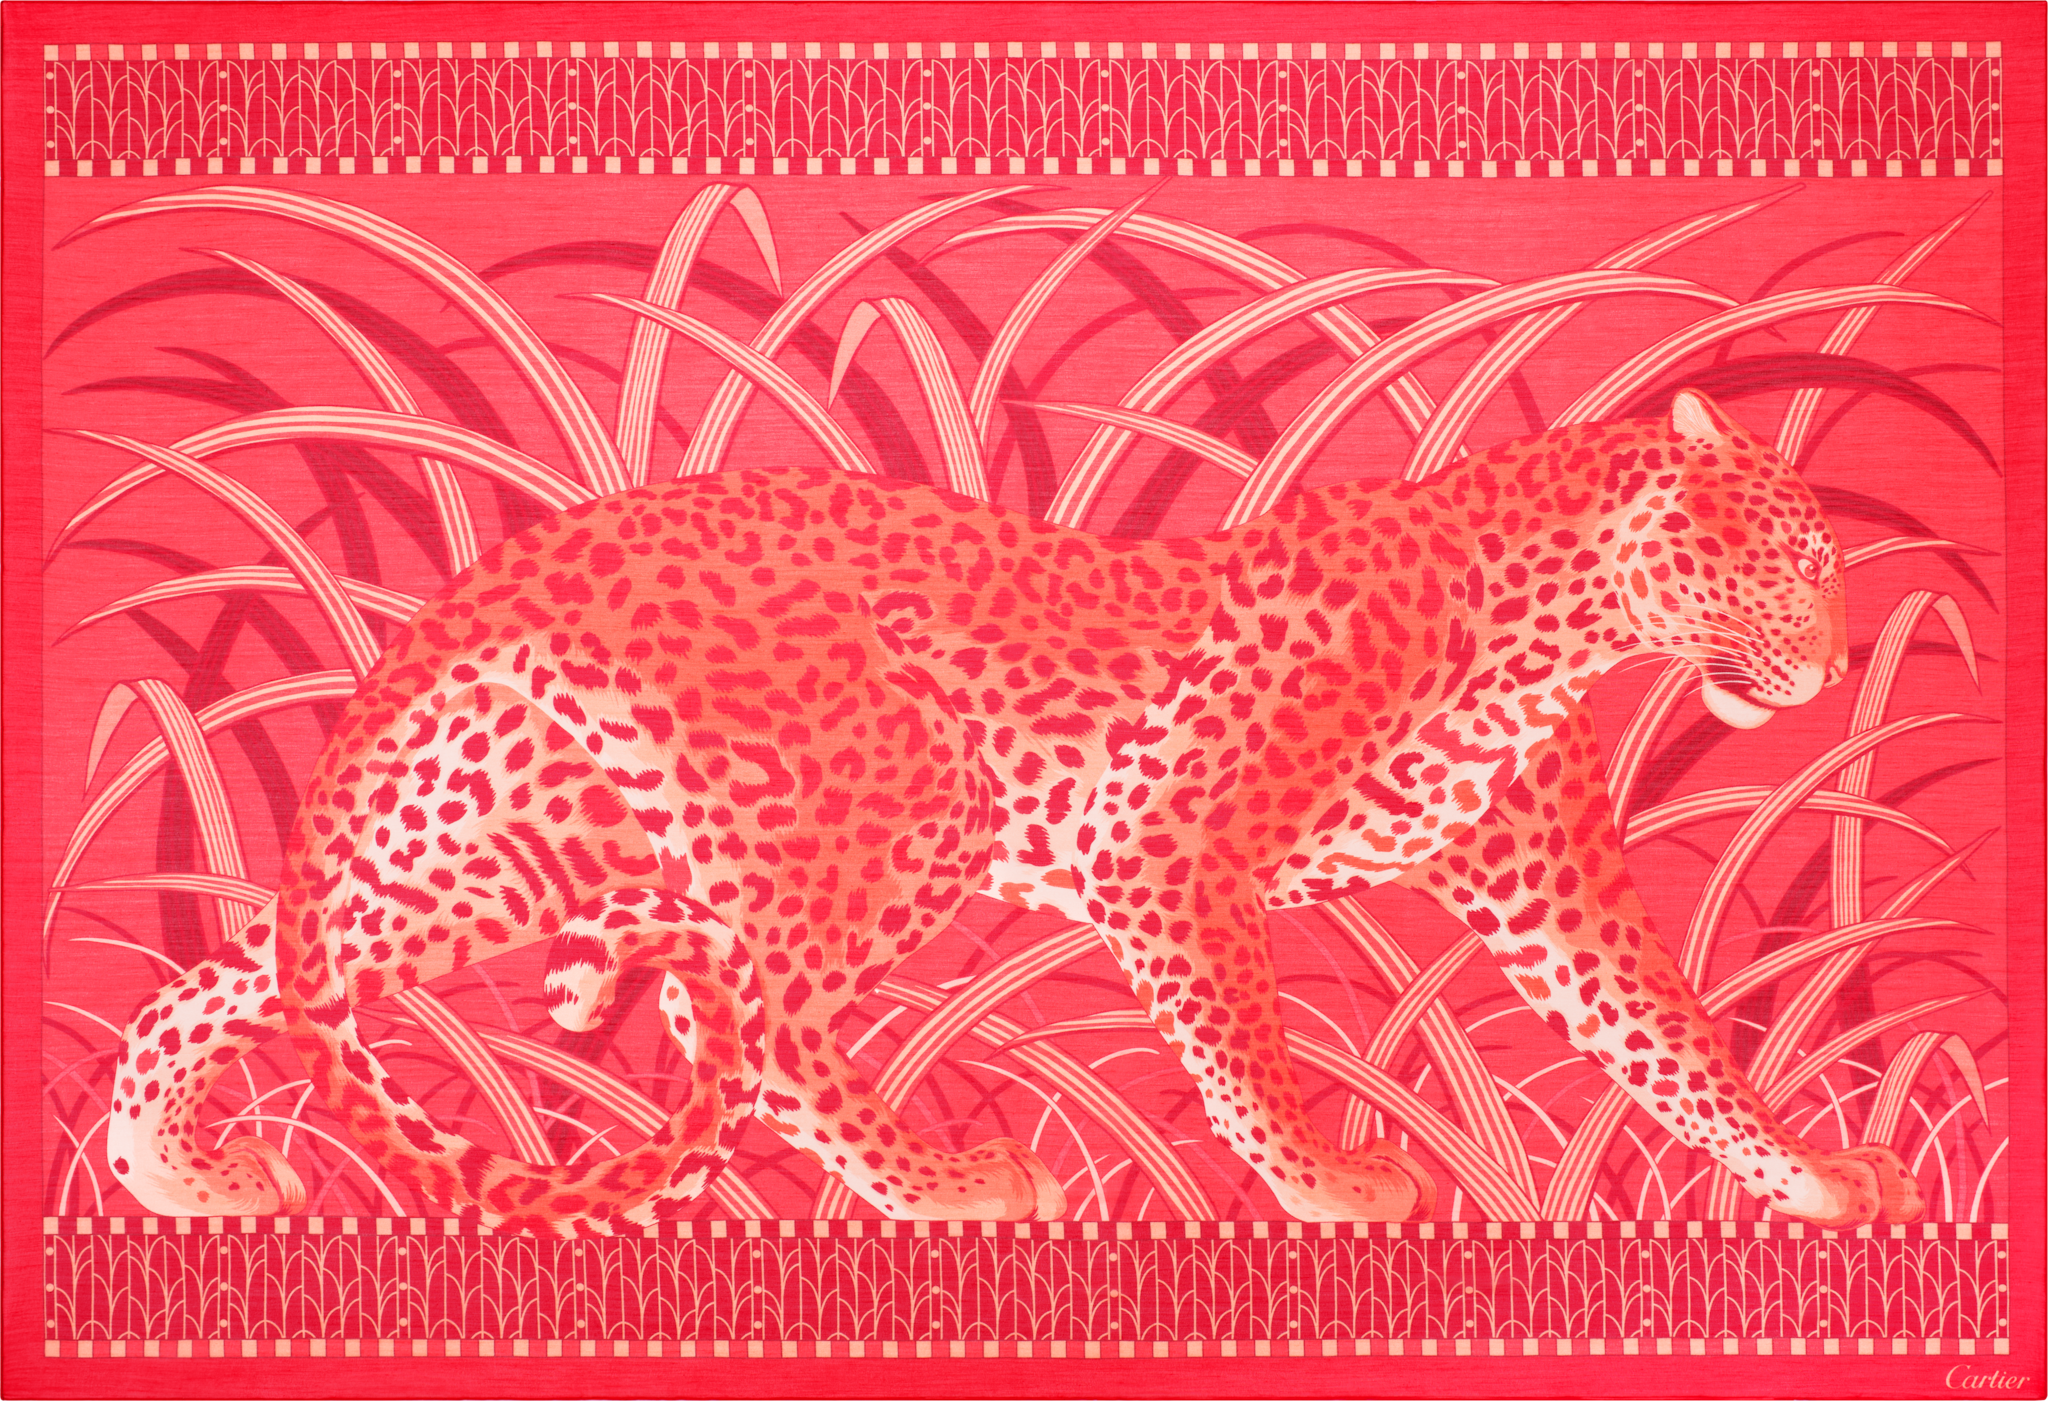 Pañuelo rectangular Panther in the jungleAlgodón y twill de seda coral